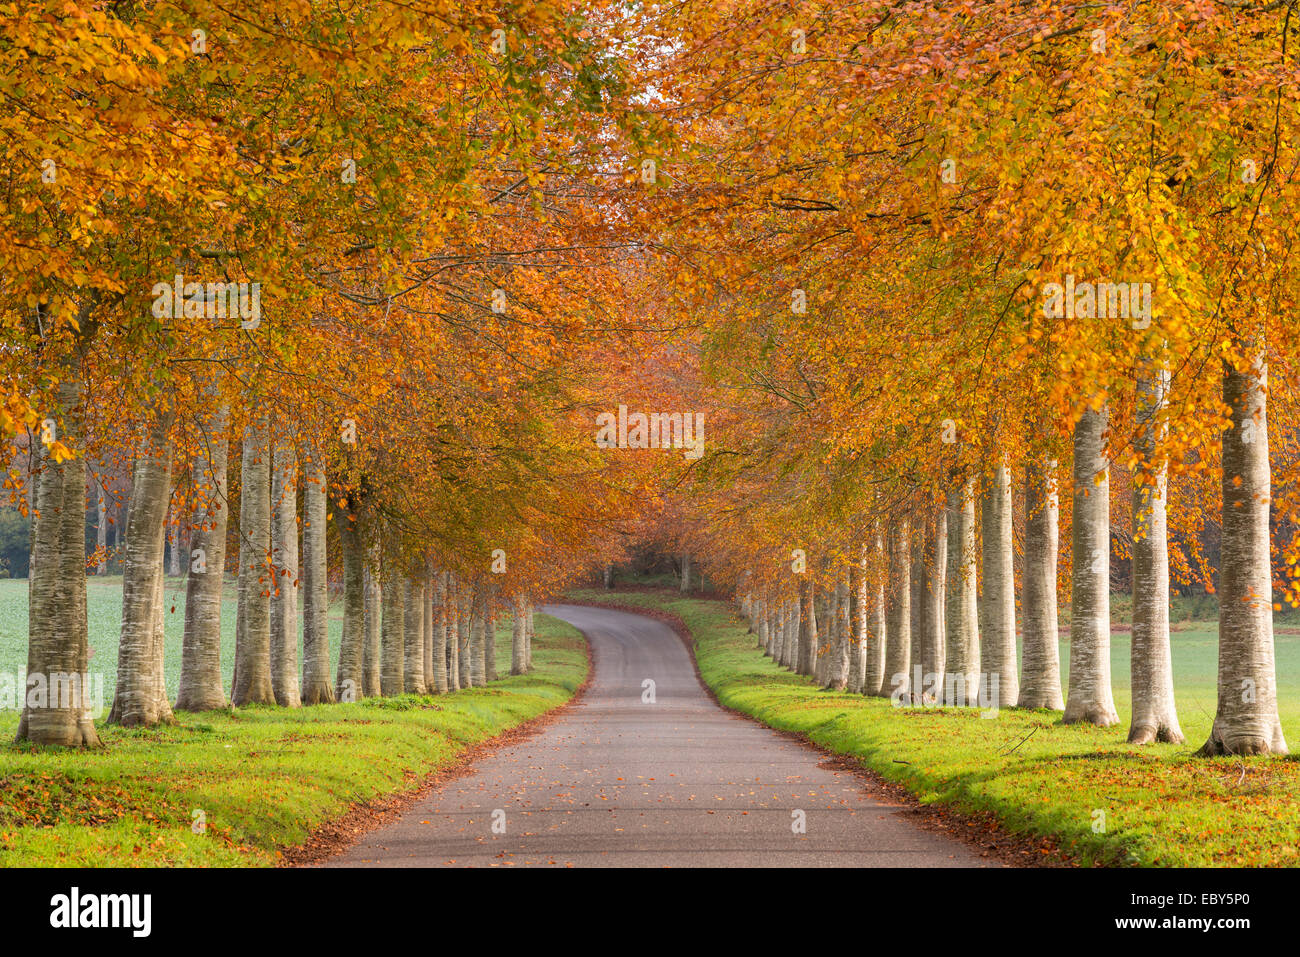 Avenue of colourful trees in autumn, Dorset, England. November 2014. Stock Photo